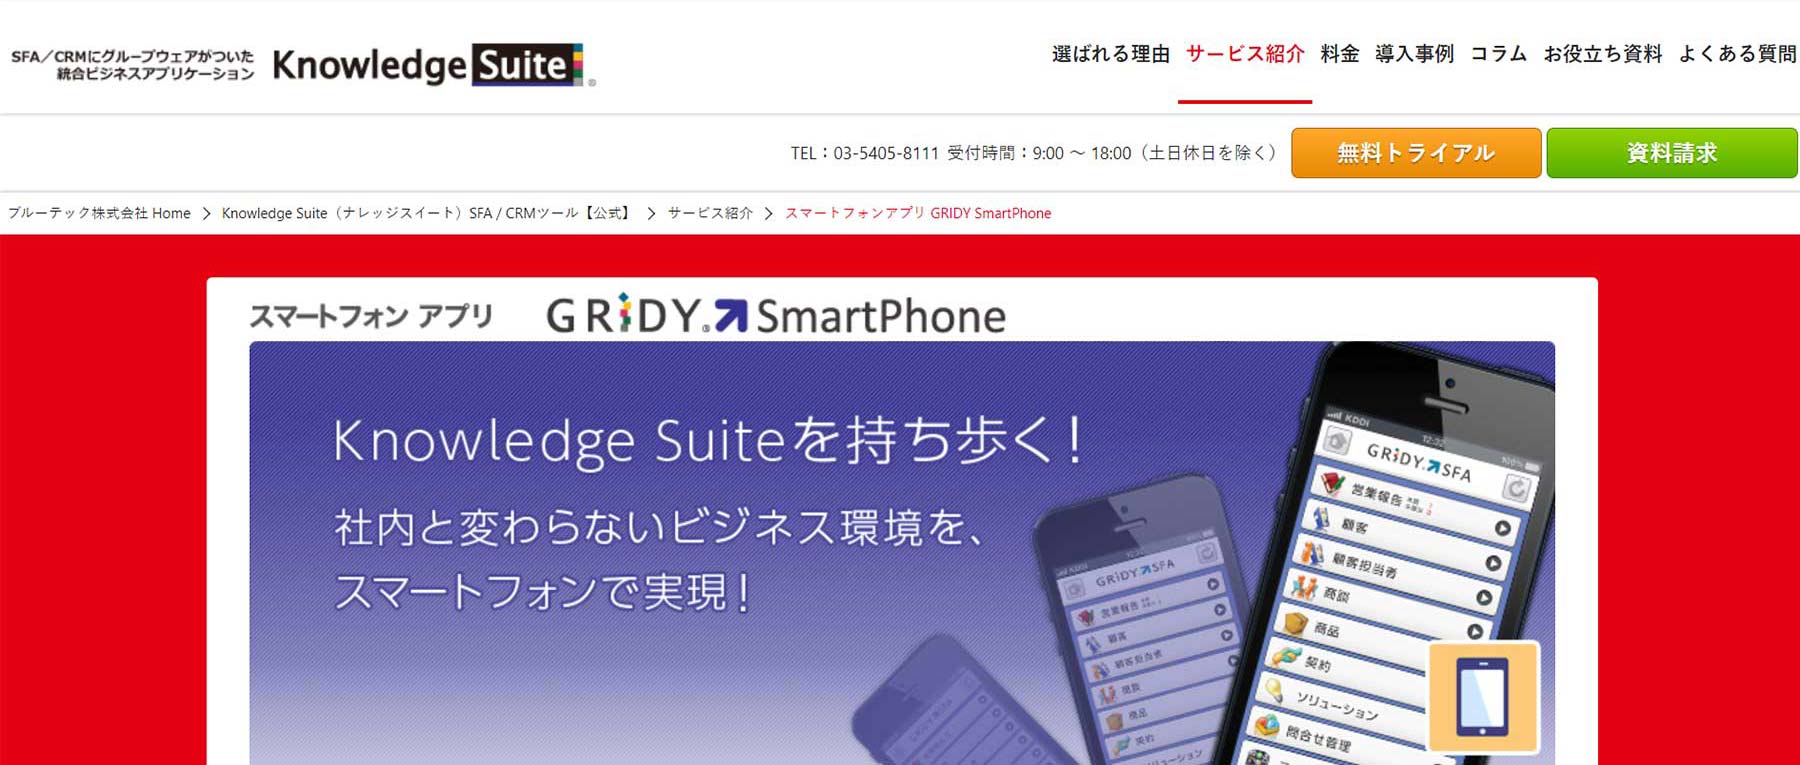 GRIDY SmartPhone公式Webサイト